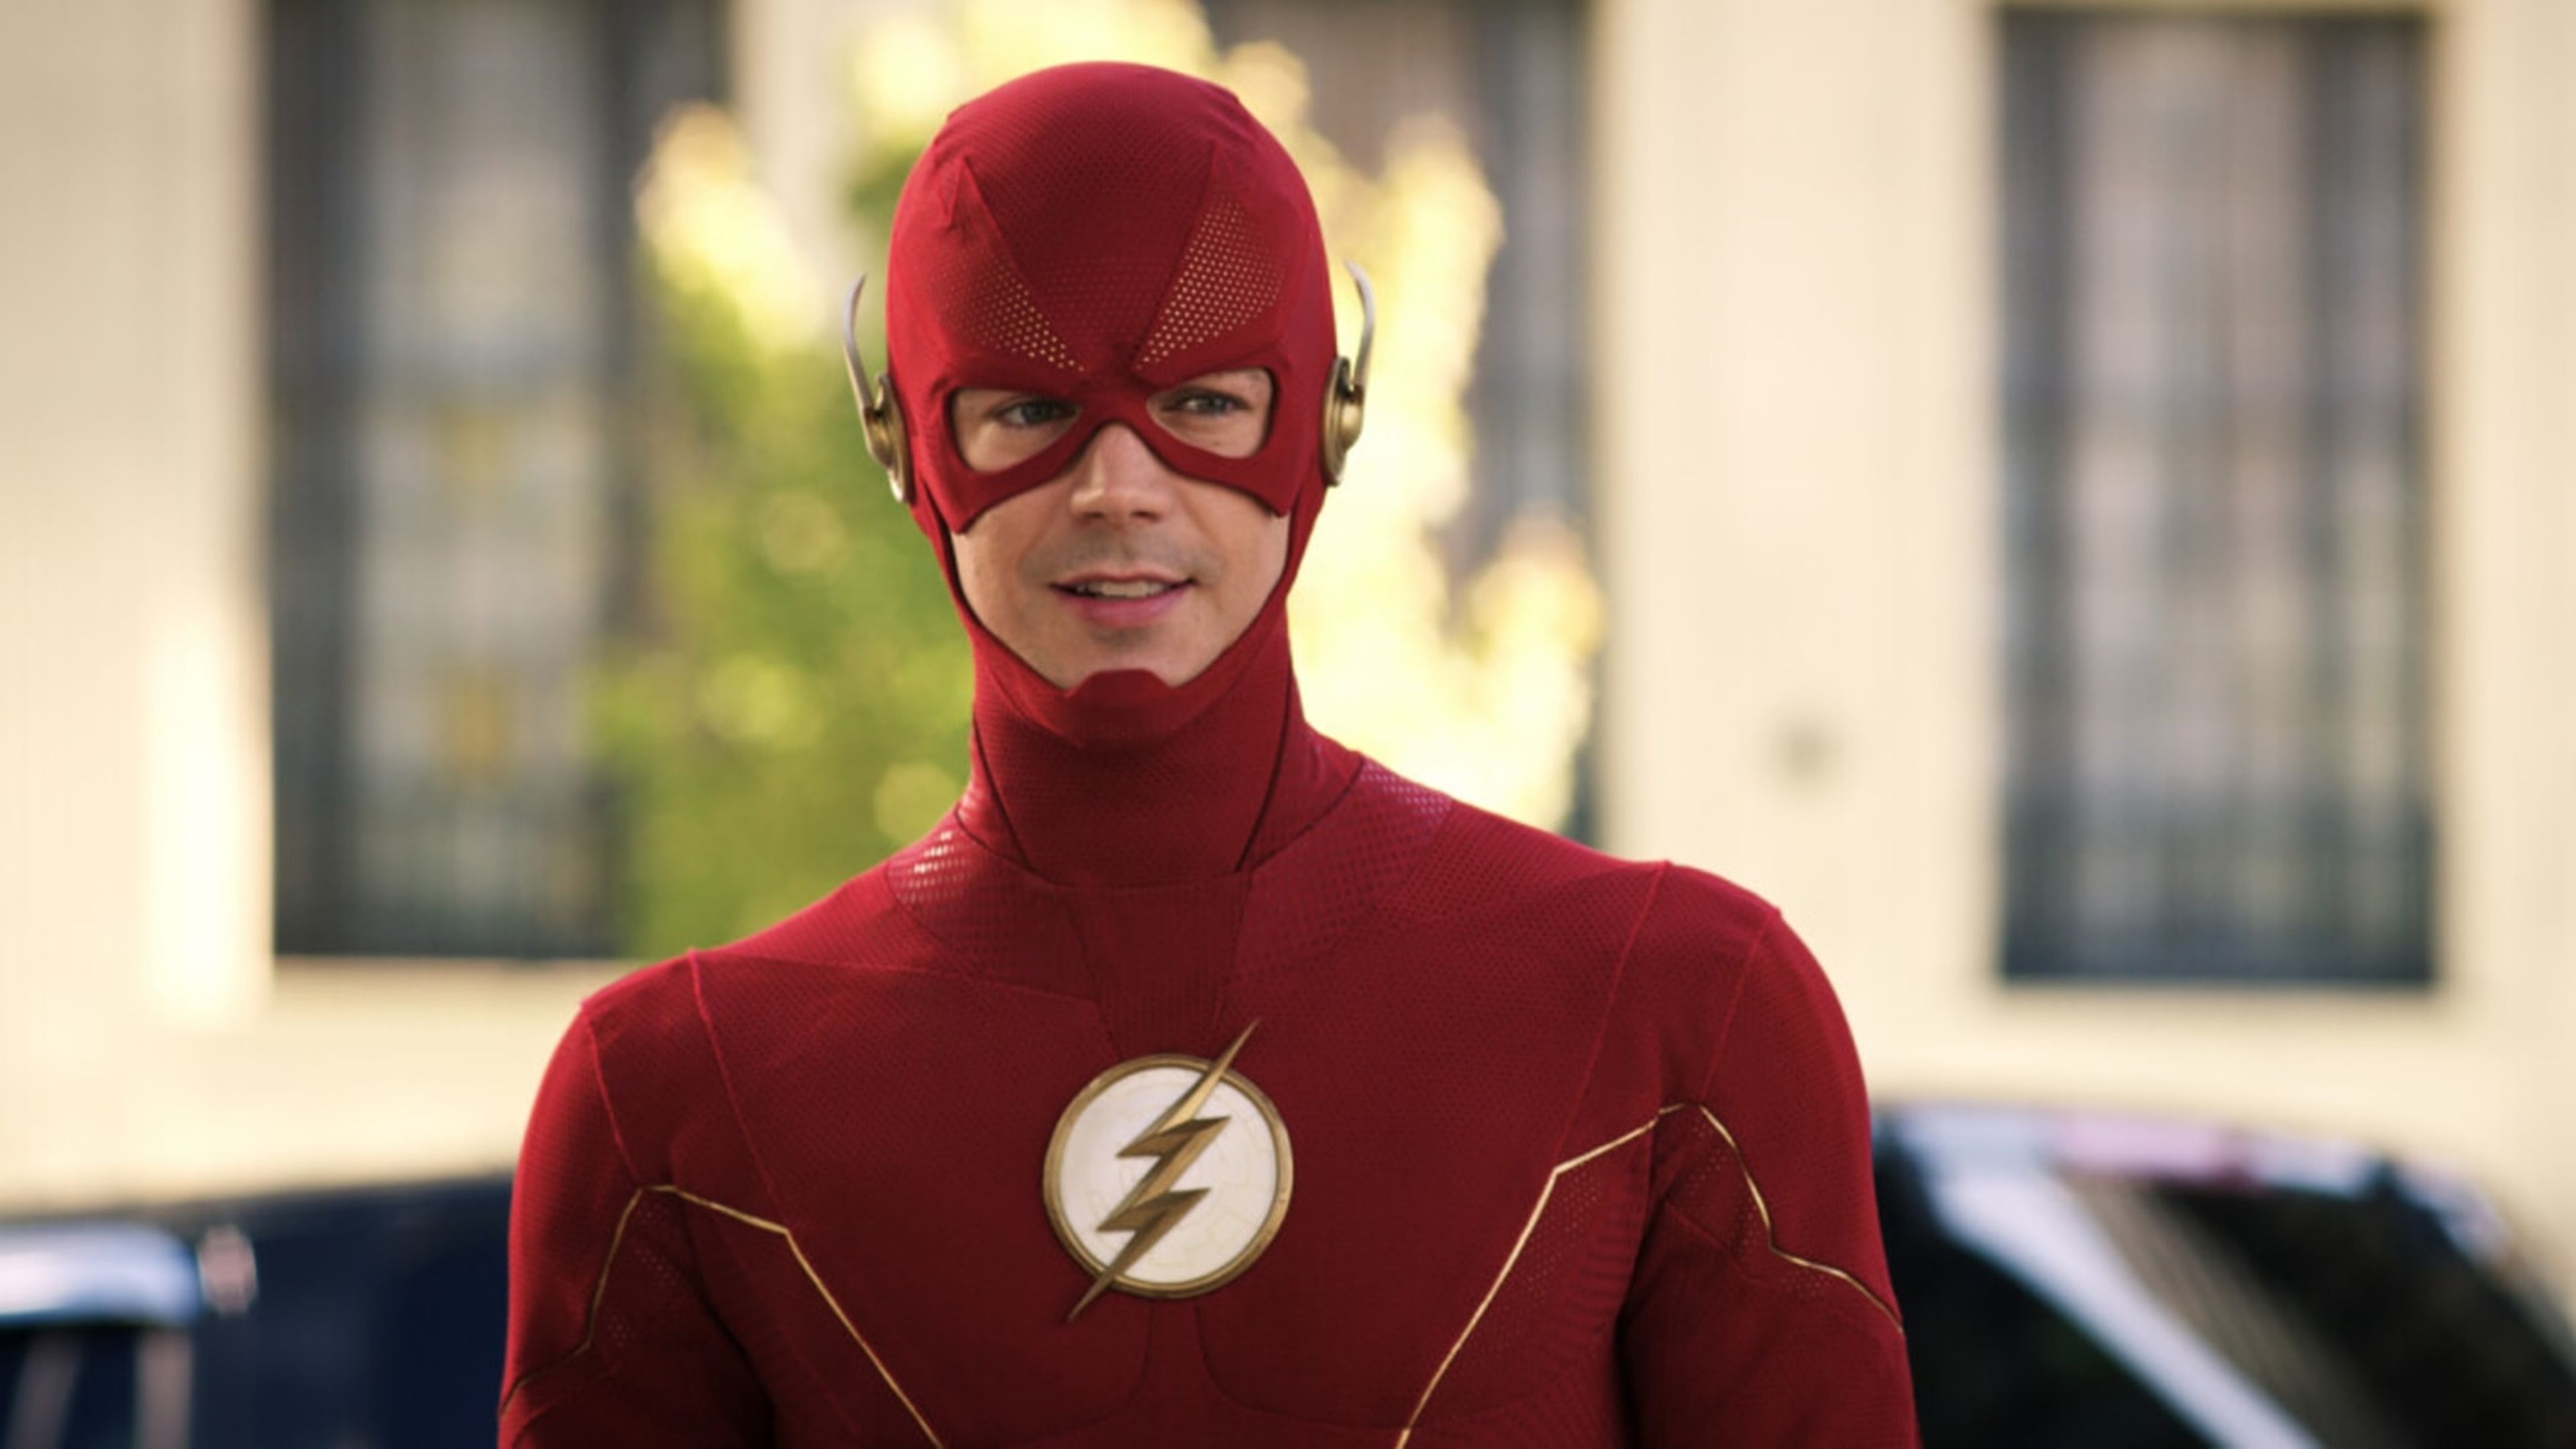 The Flash (TV Series)